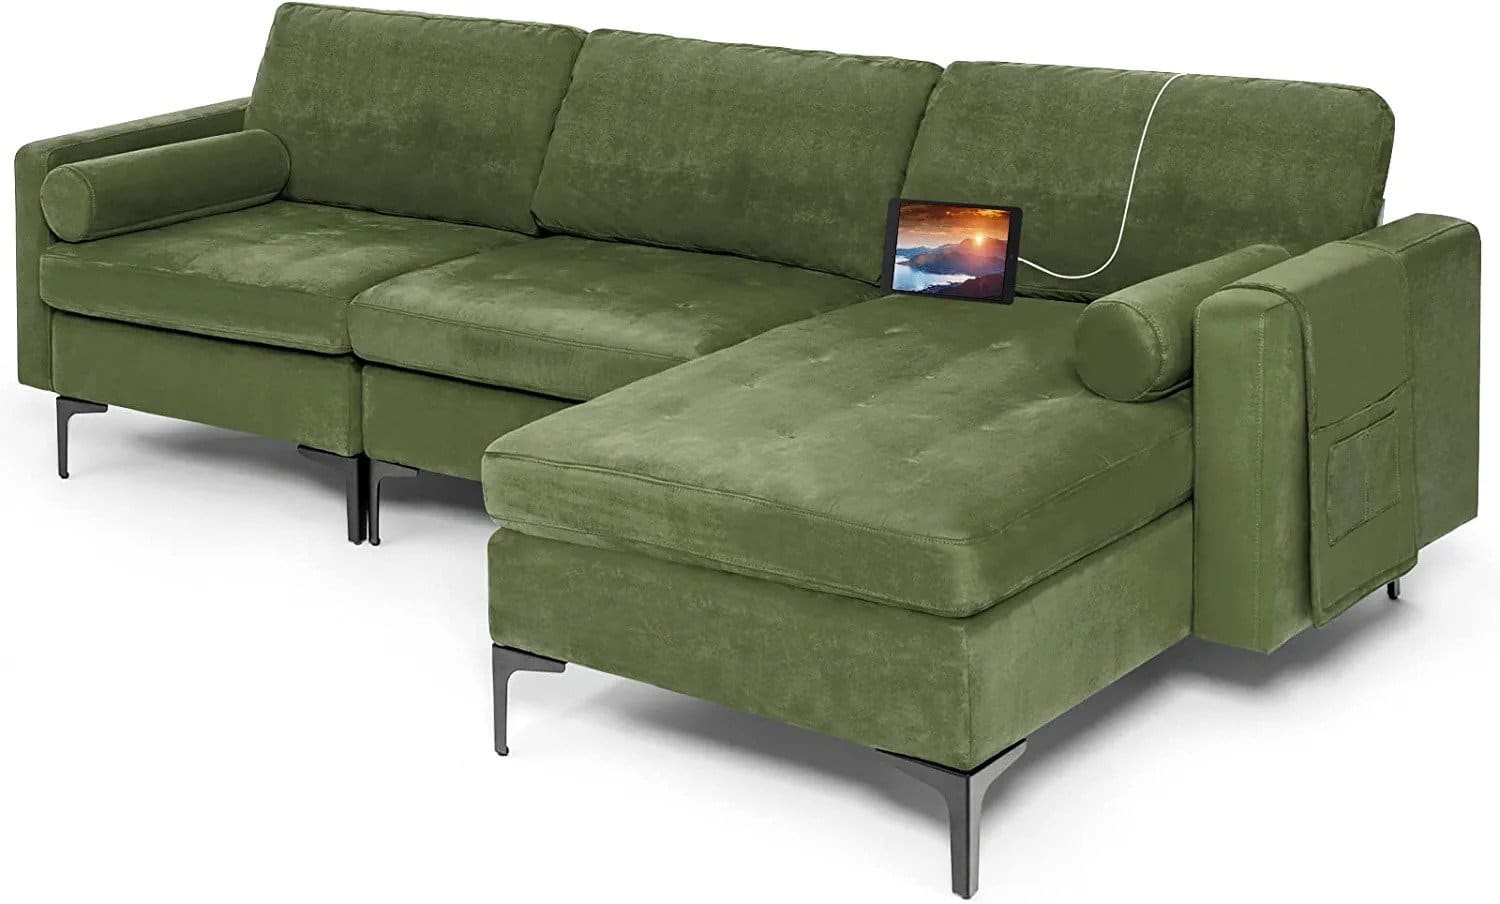 Giantex Modular Sectional Sofa with USB Ports